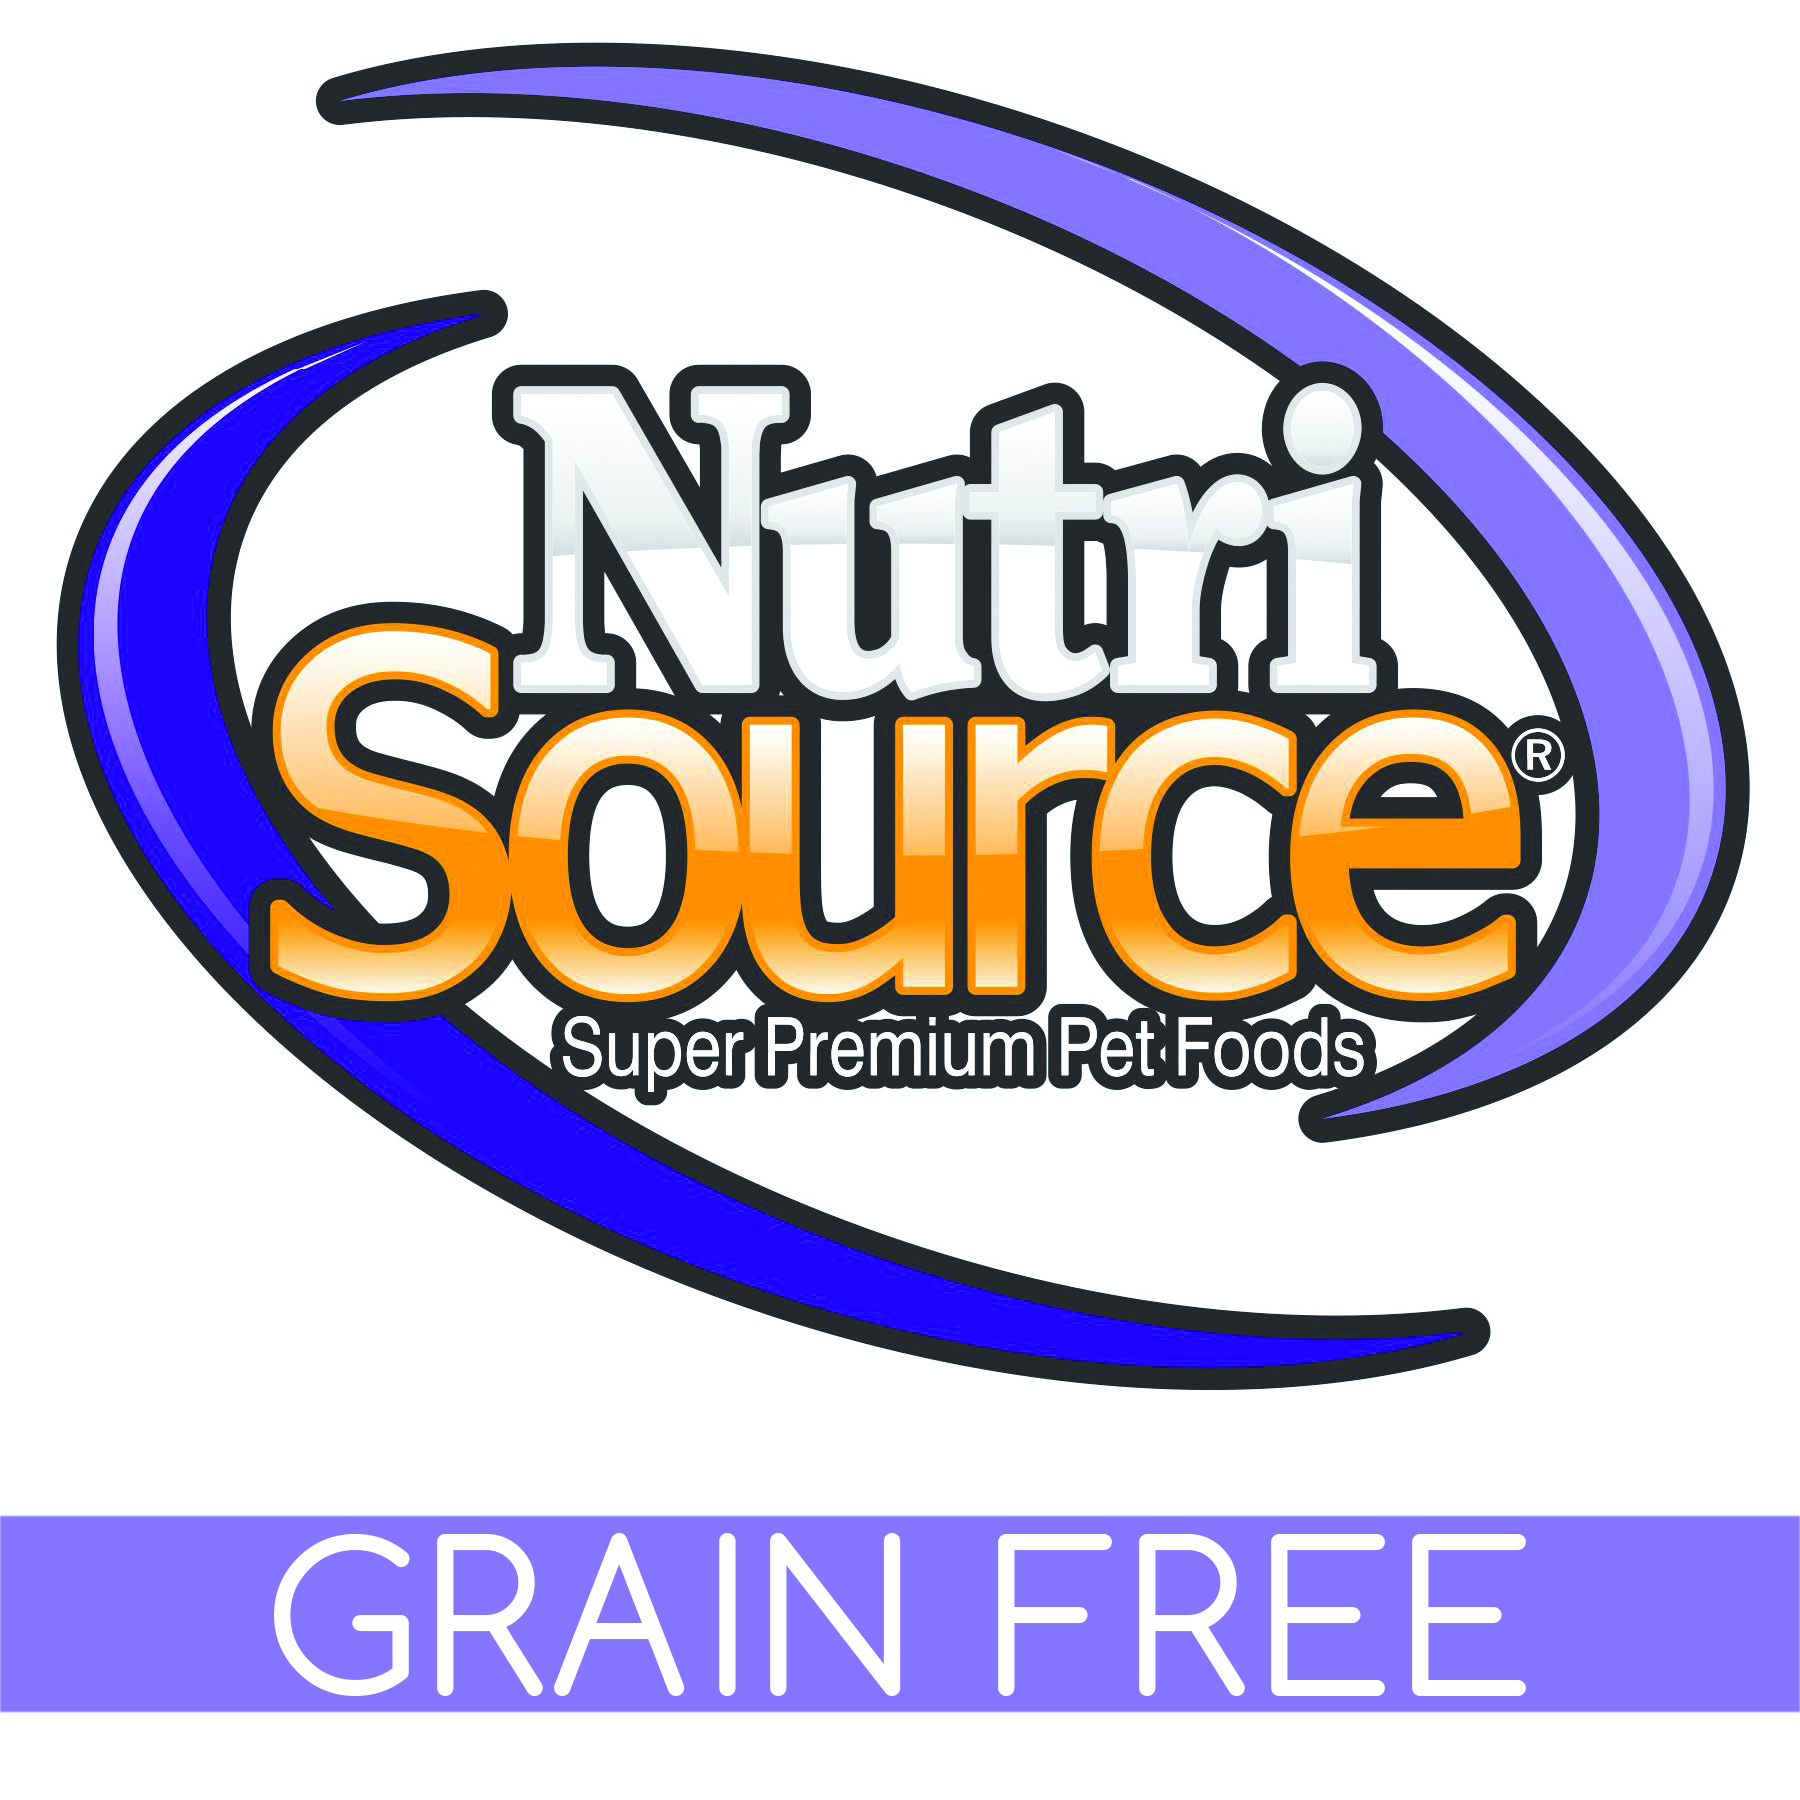 nutrisource senior grain free dog food